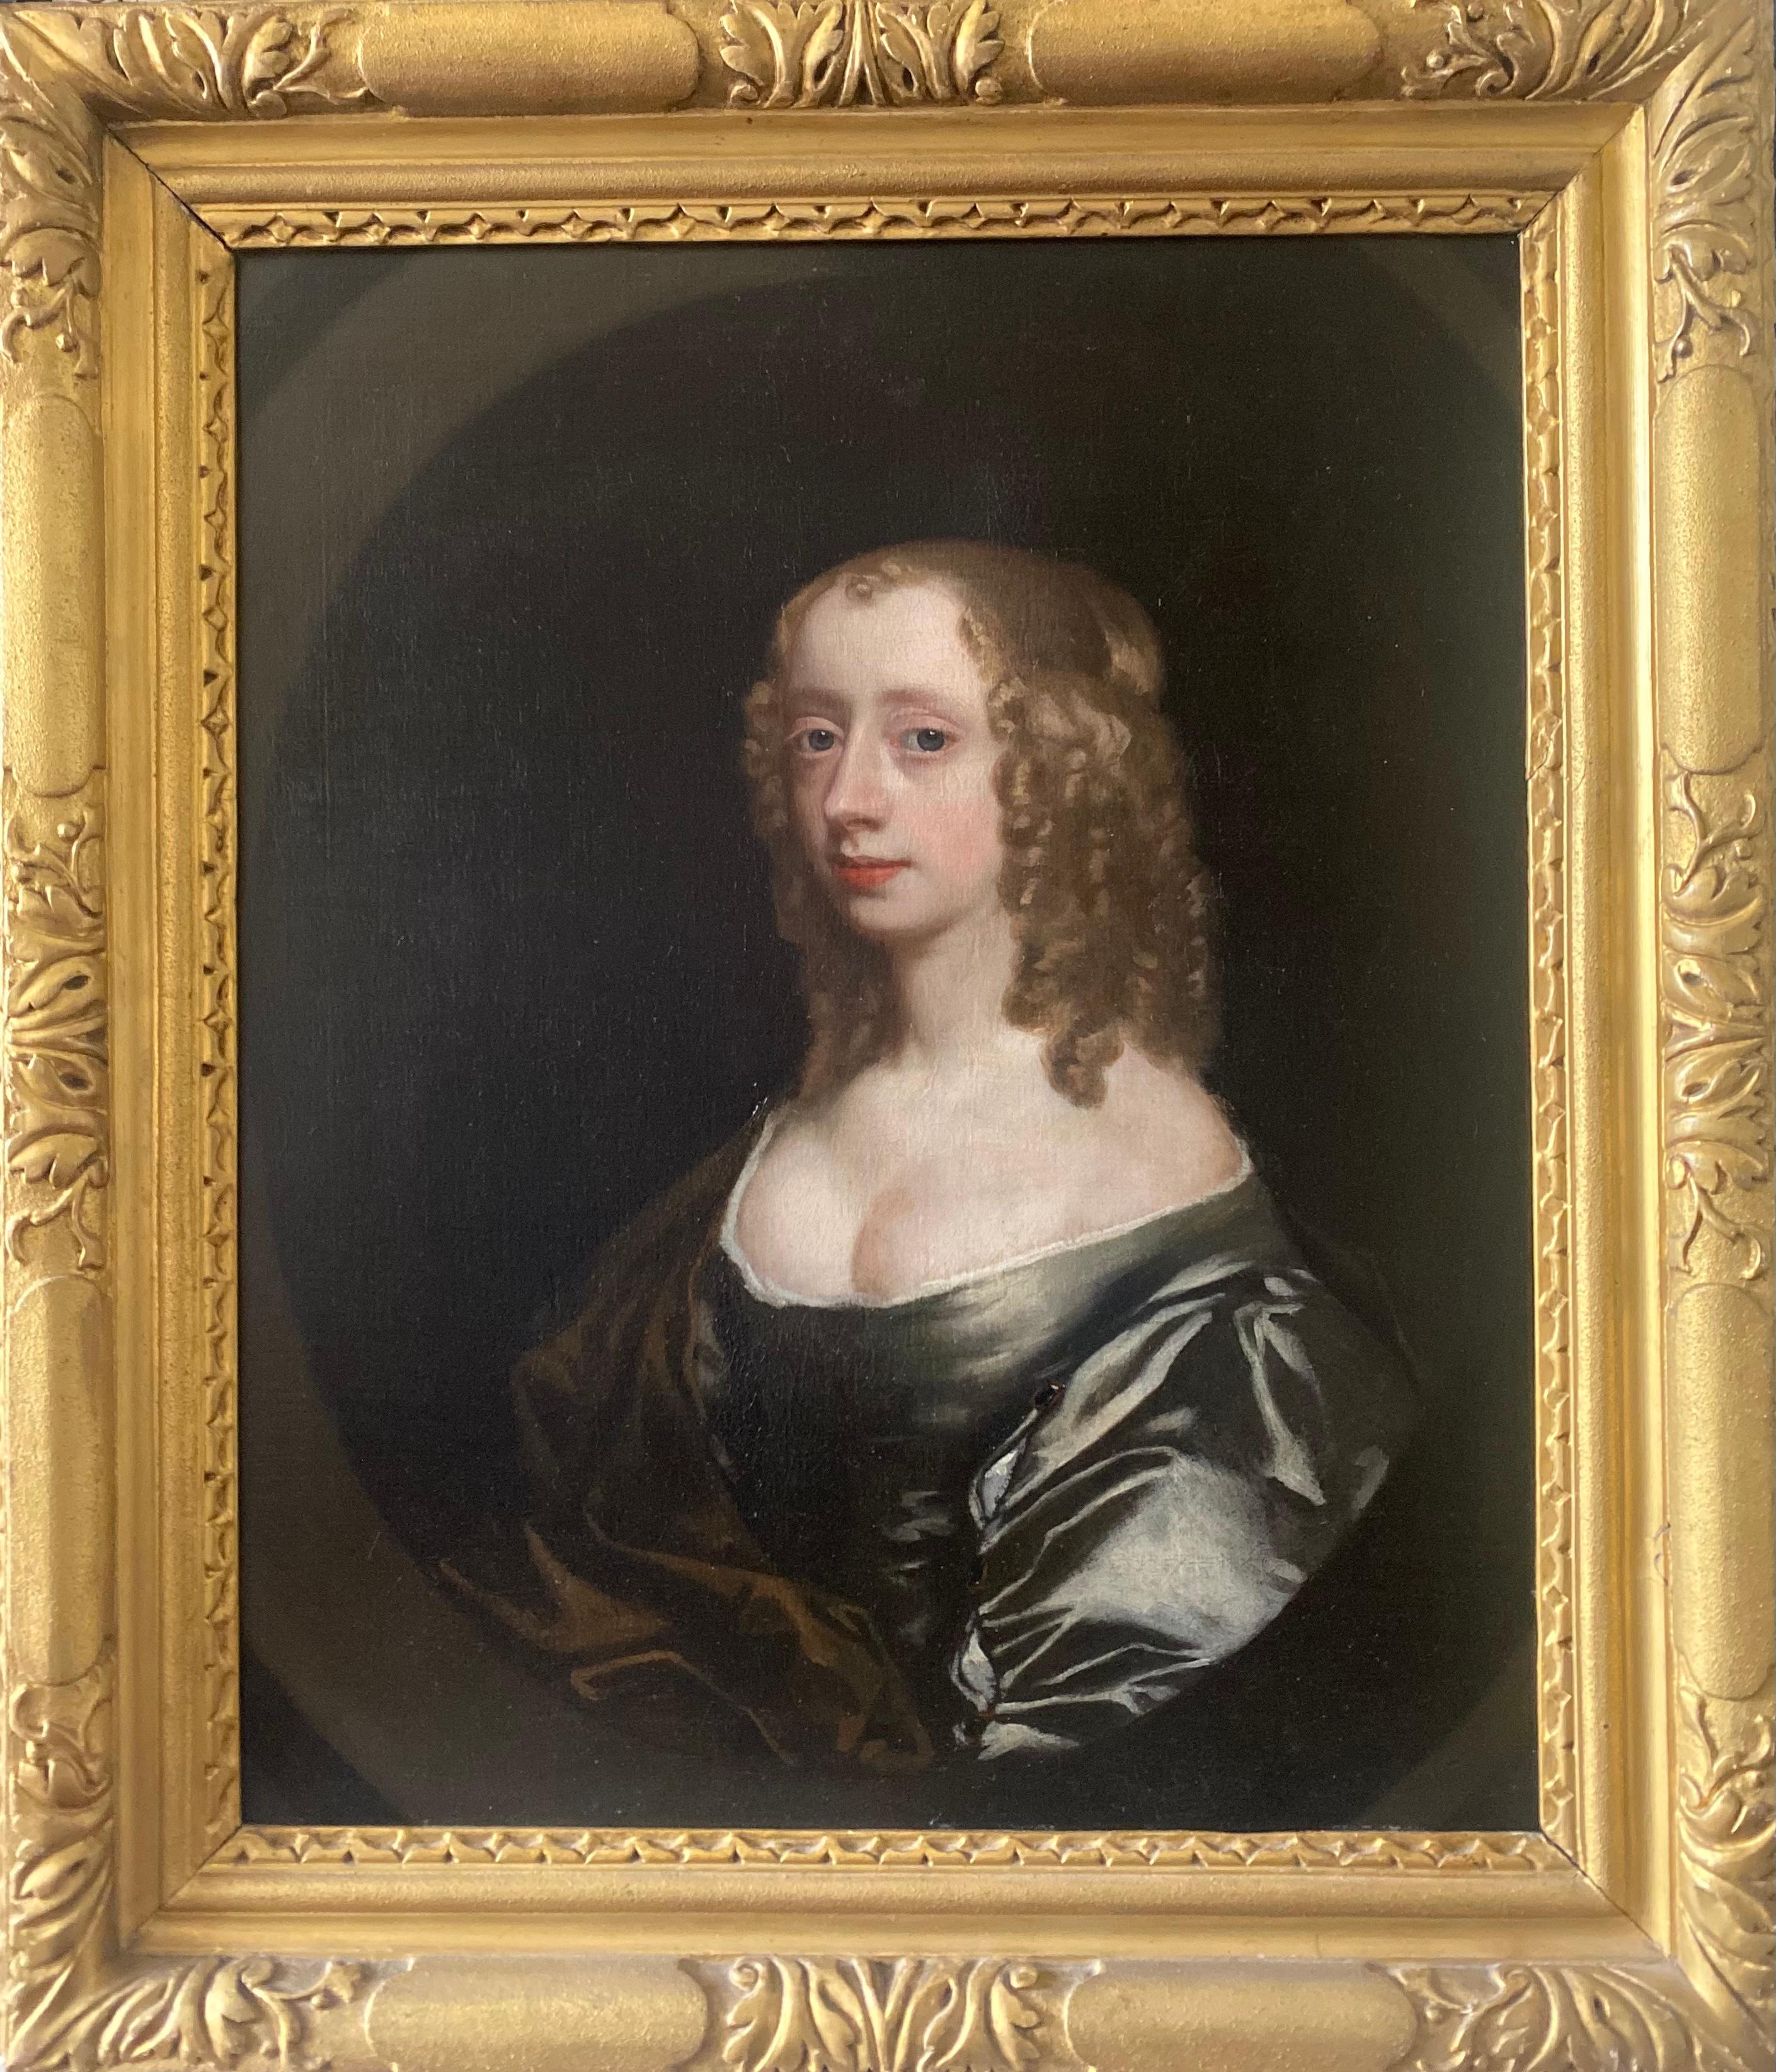 English 17th century portrait of a lady